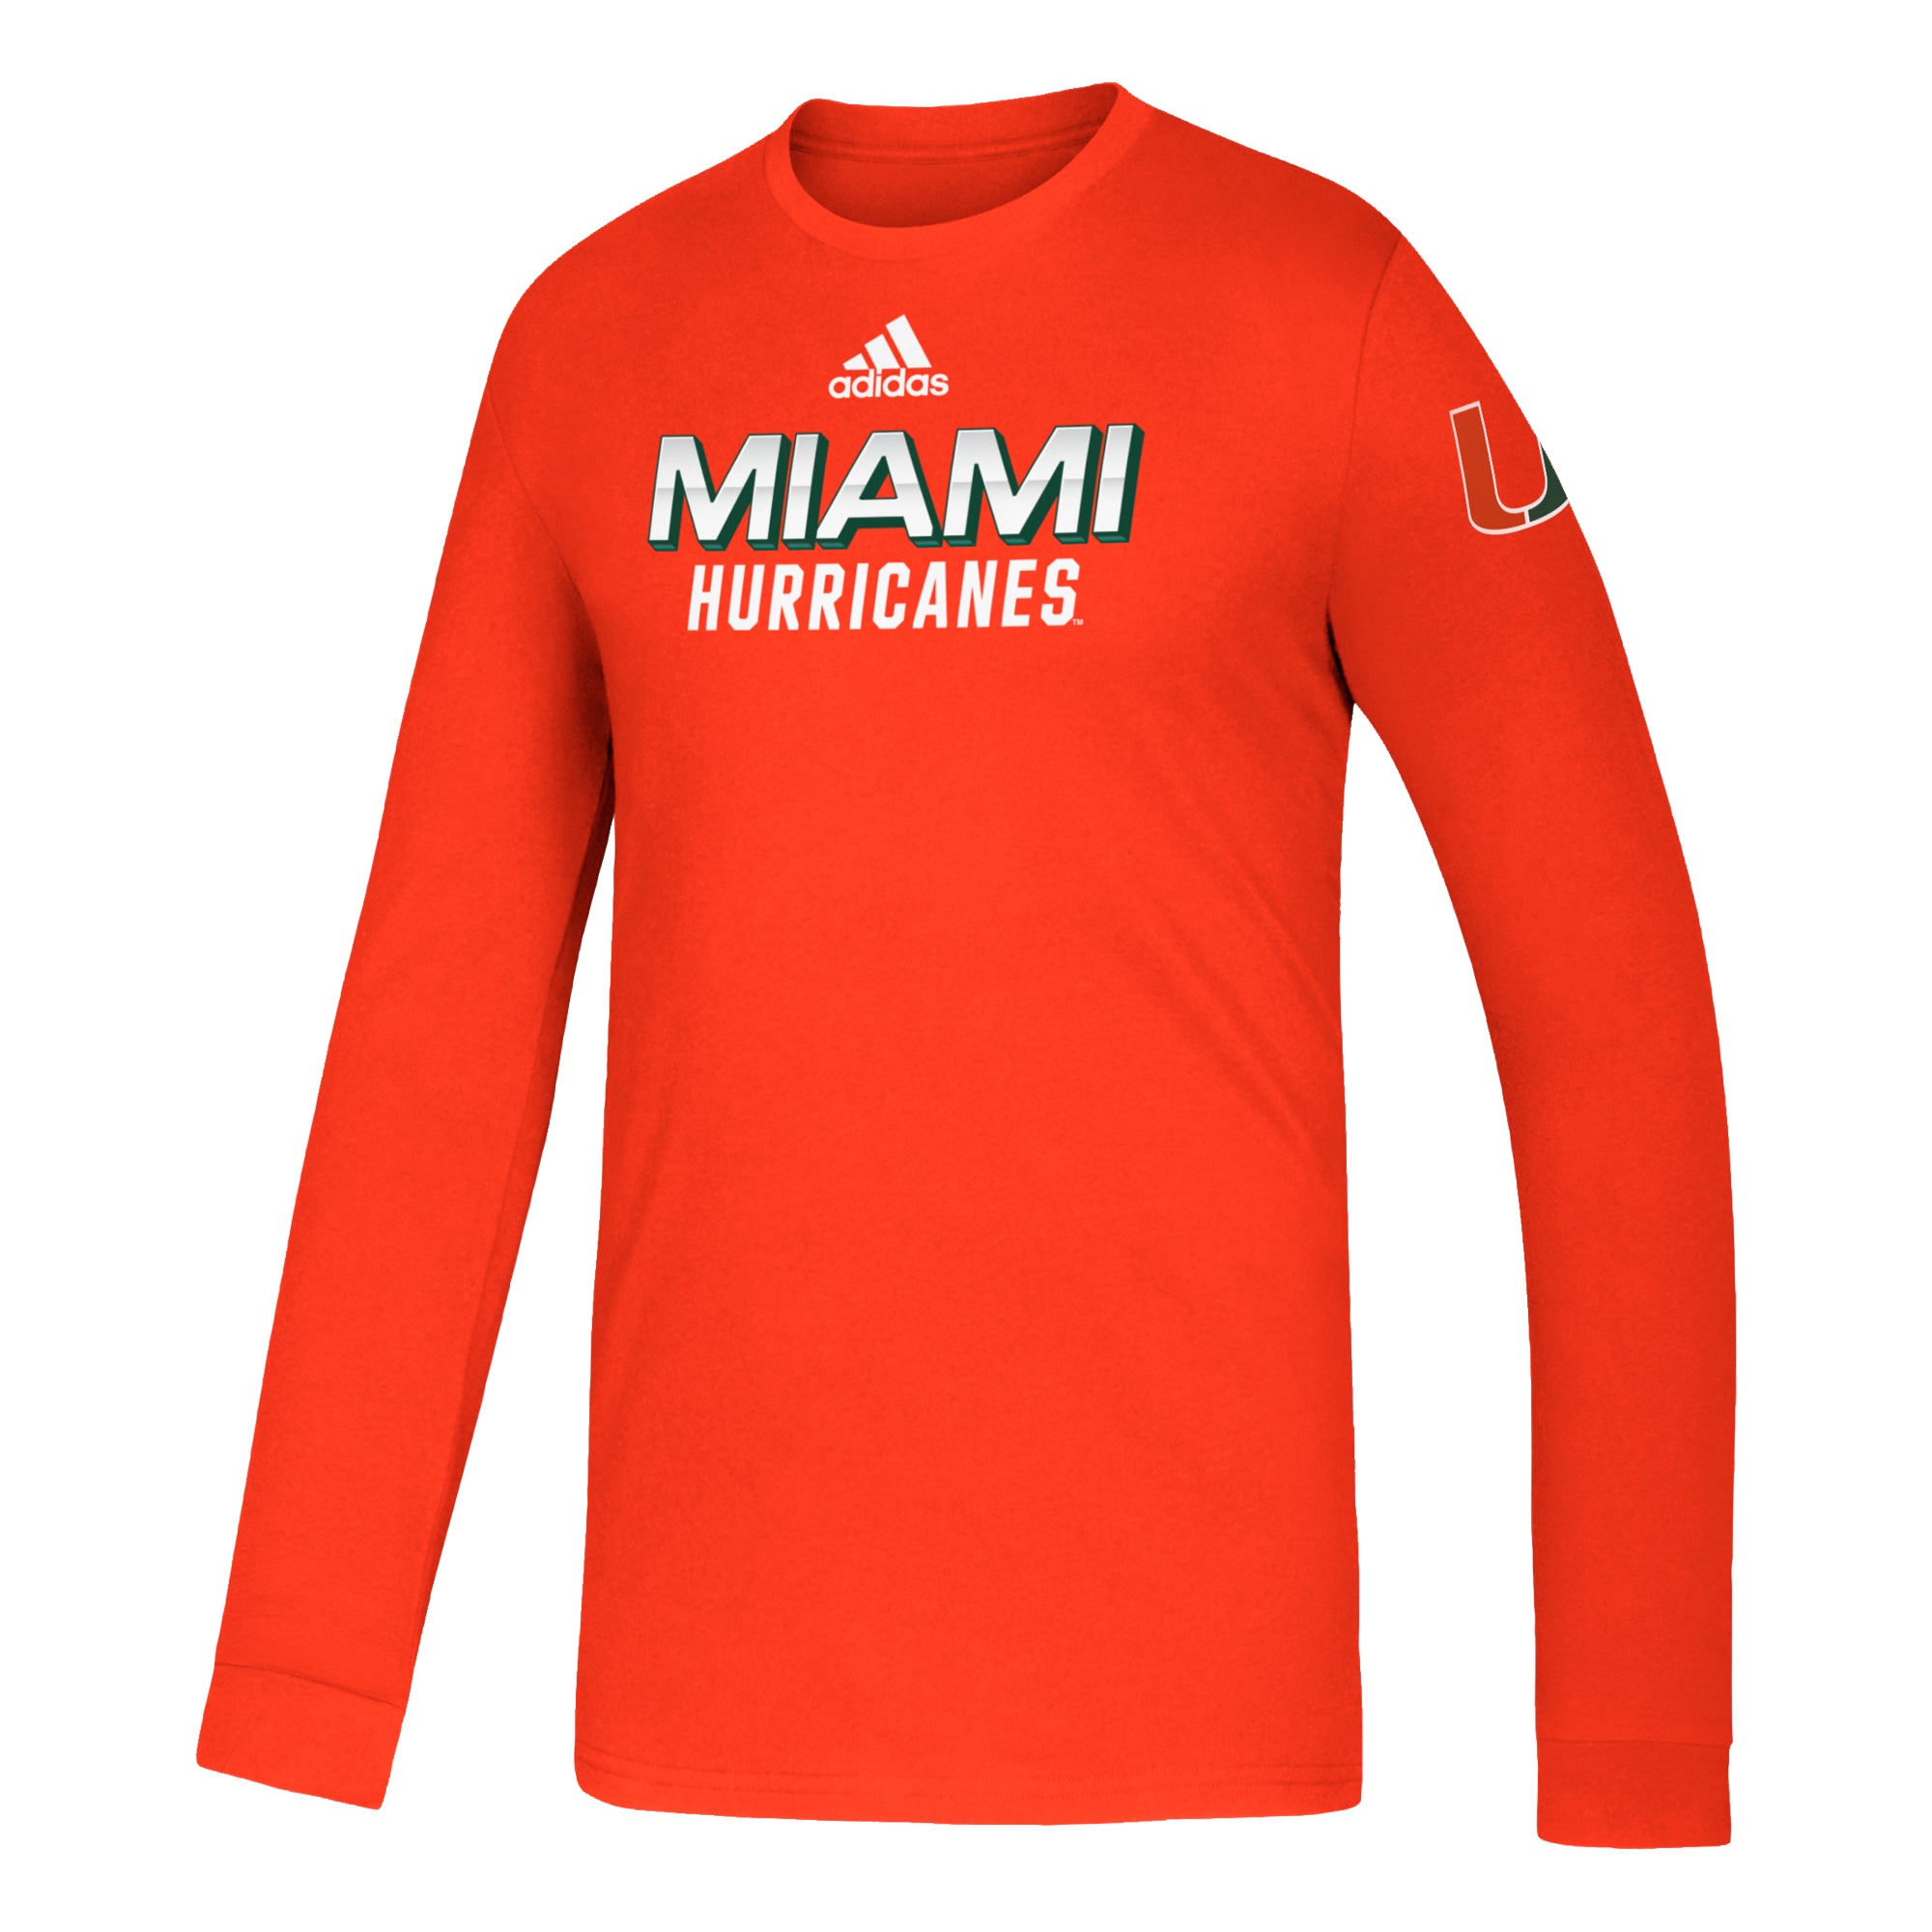 Miami Hurricanes adidas Youth Amplifier L/S T-Shirt - Orange